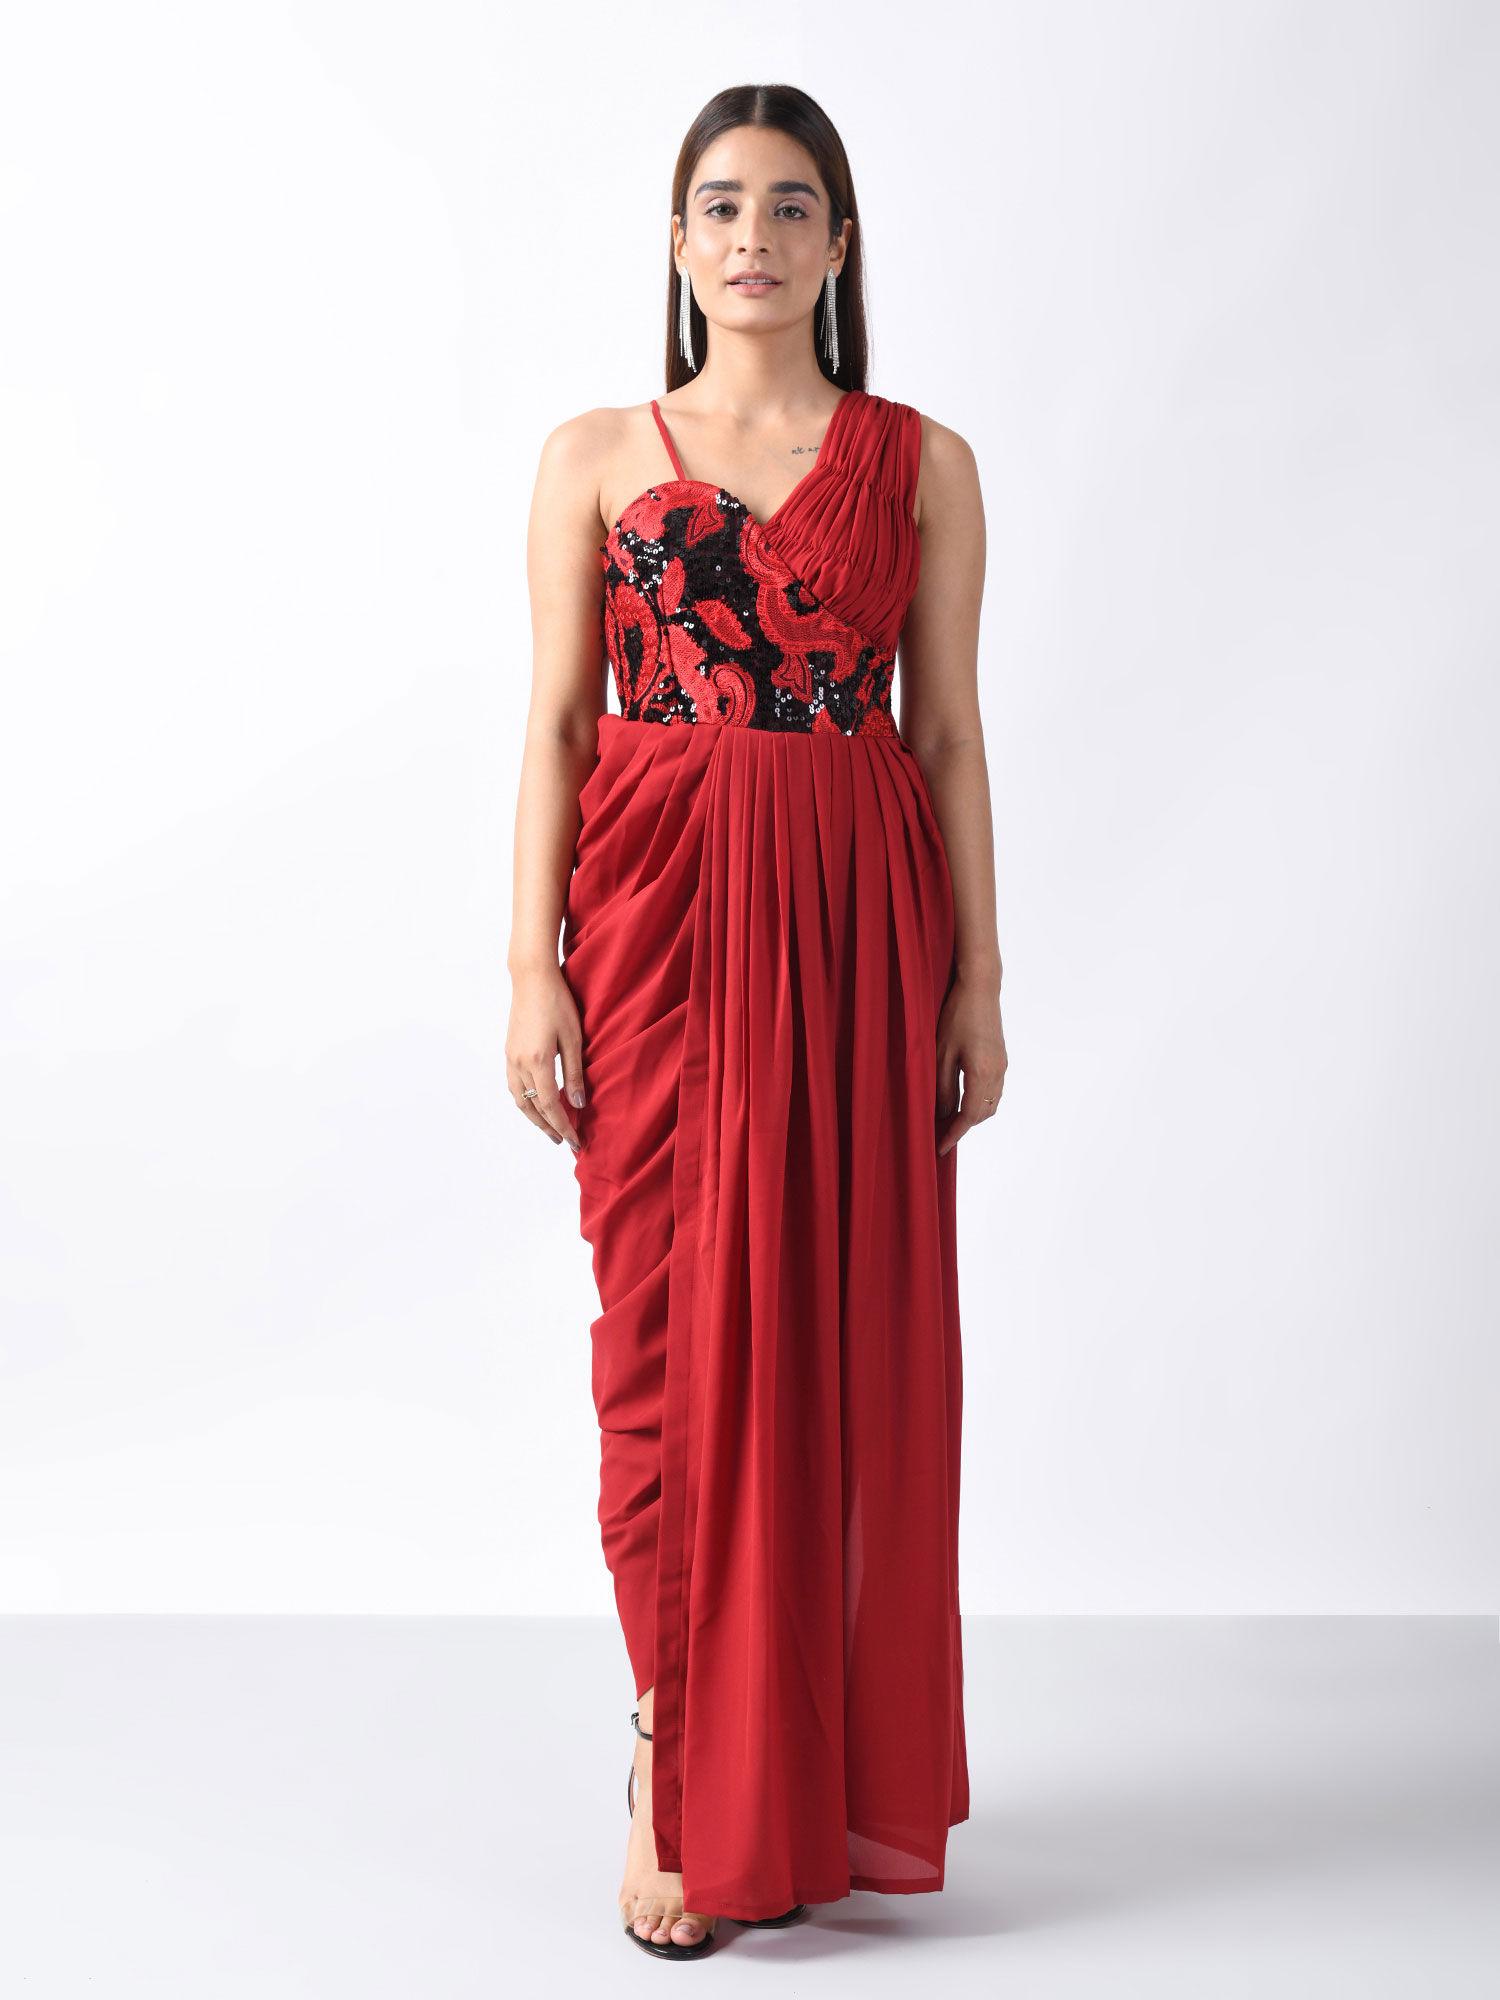 paola embellished corset red draped dress